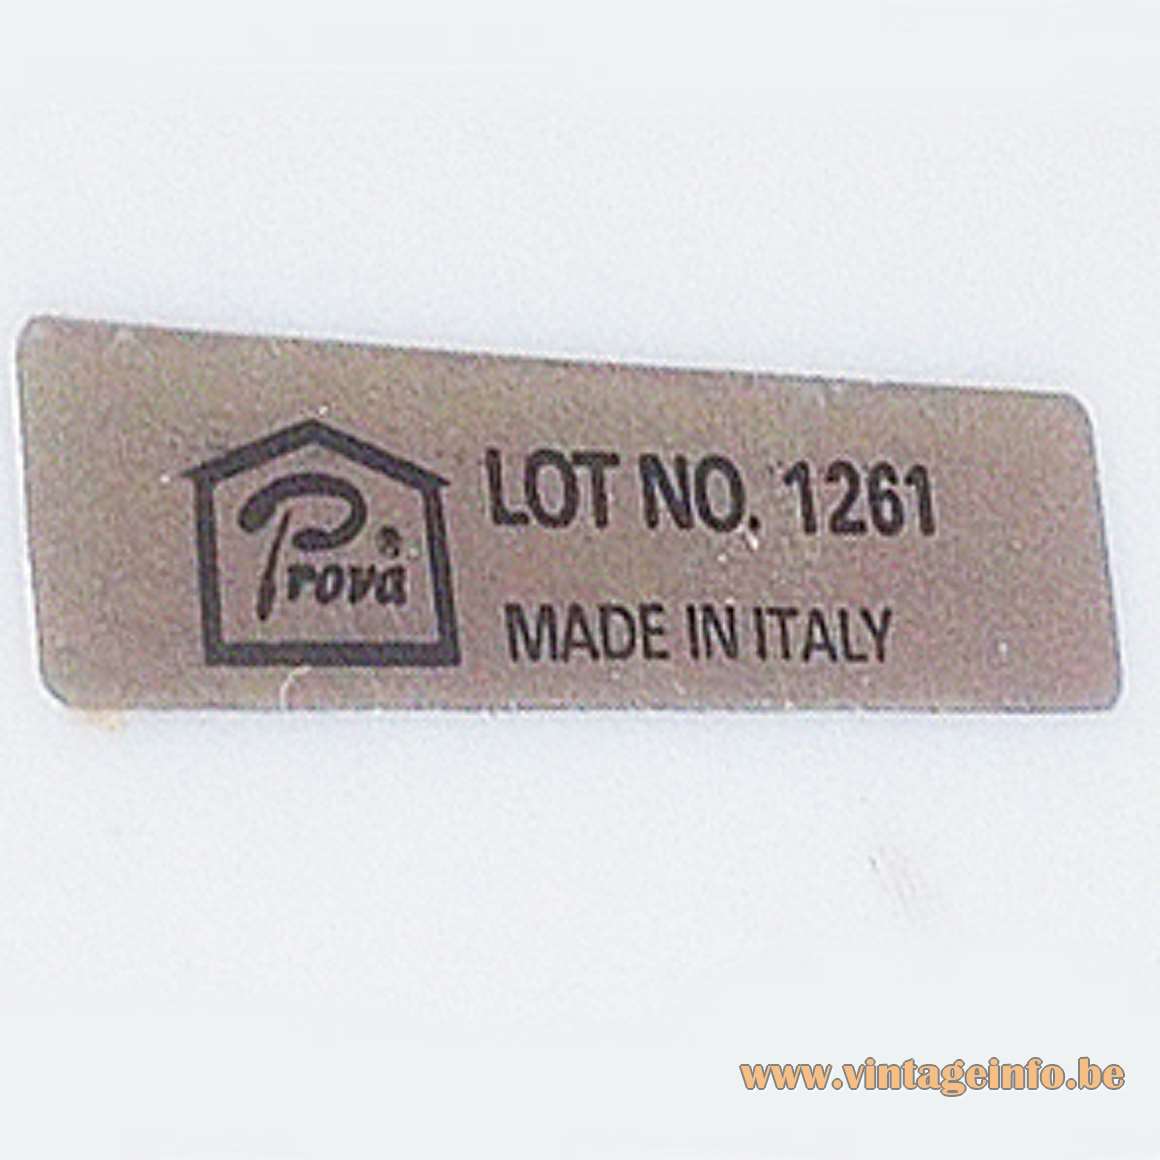 Prova Made in Italy Label